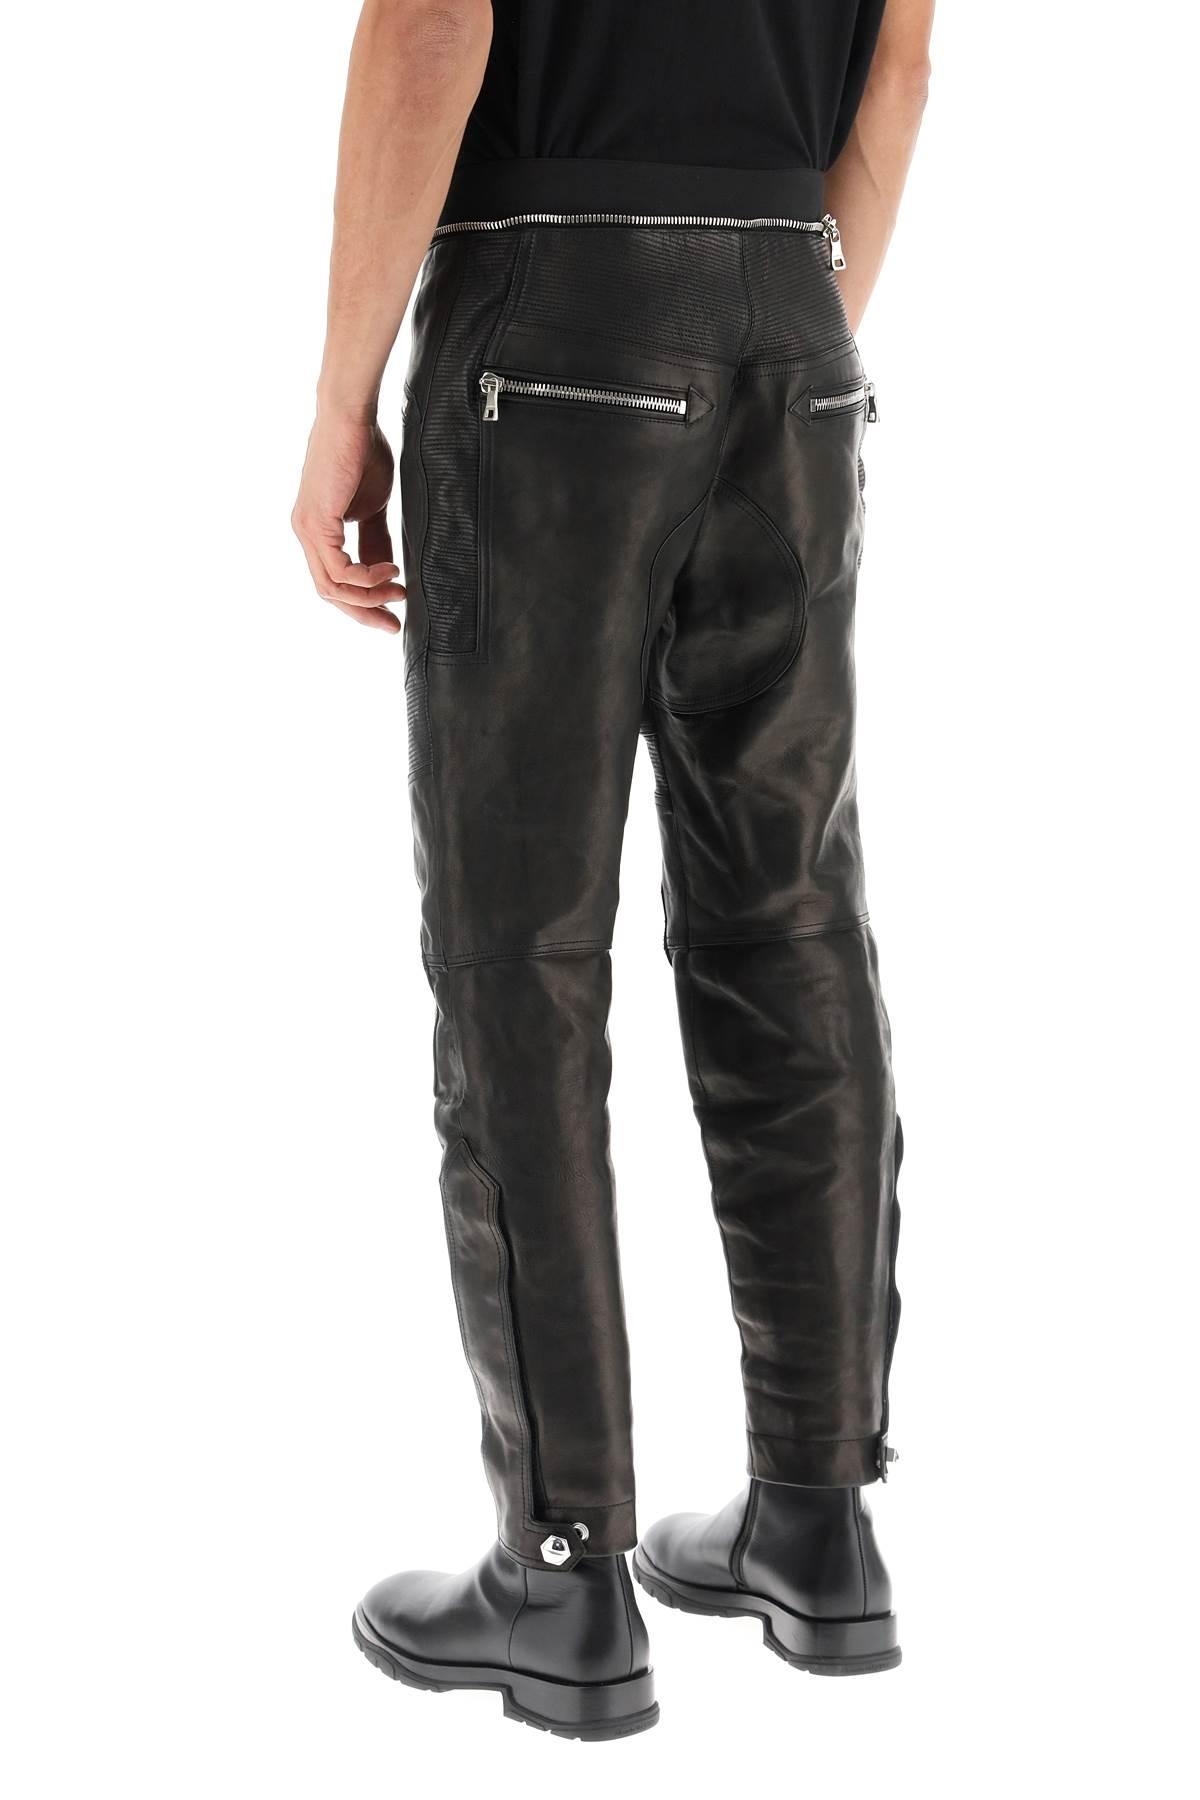 Balmain Zippered Leather Biker Pants in Black for Men | Lyst